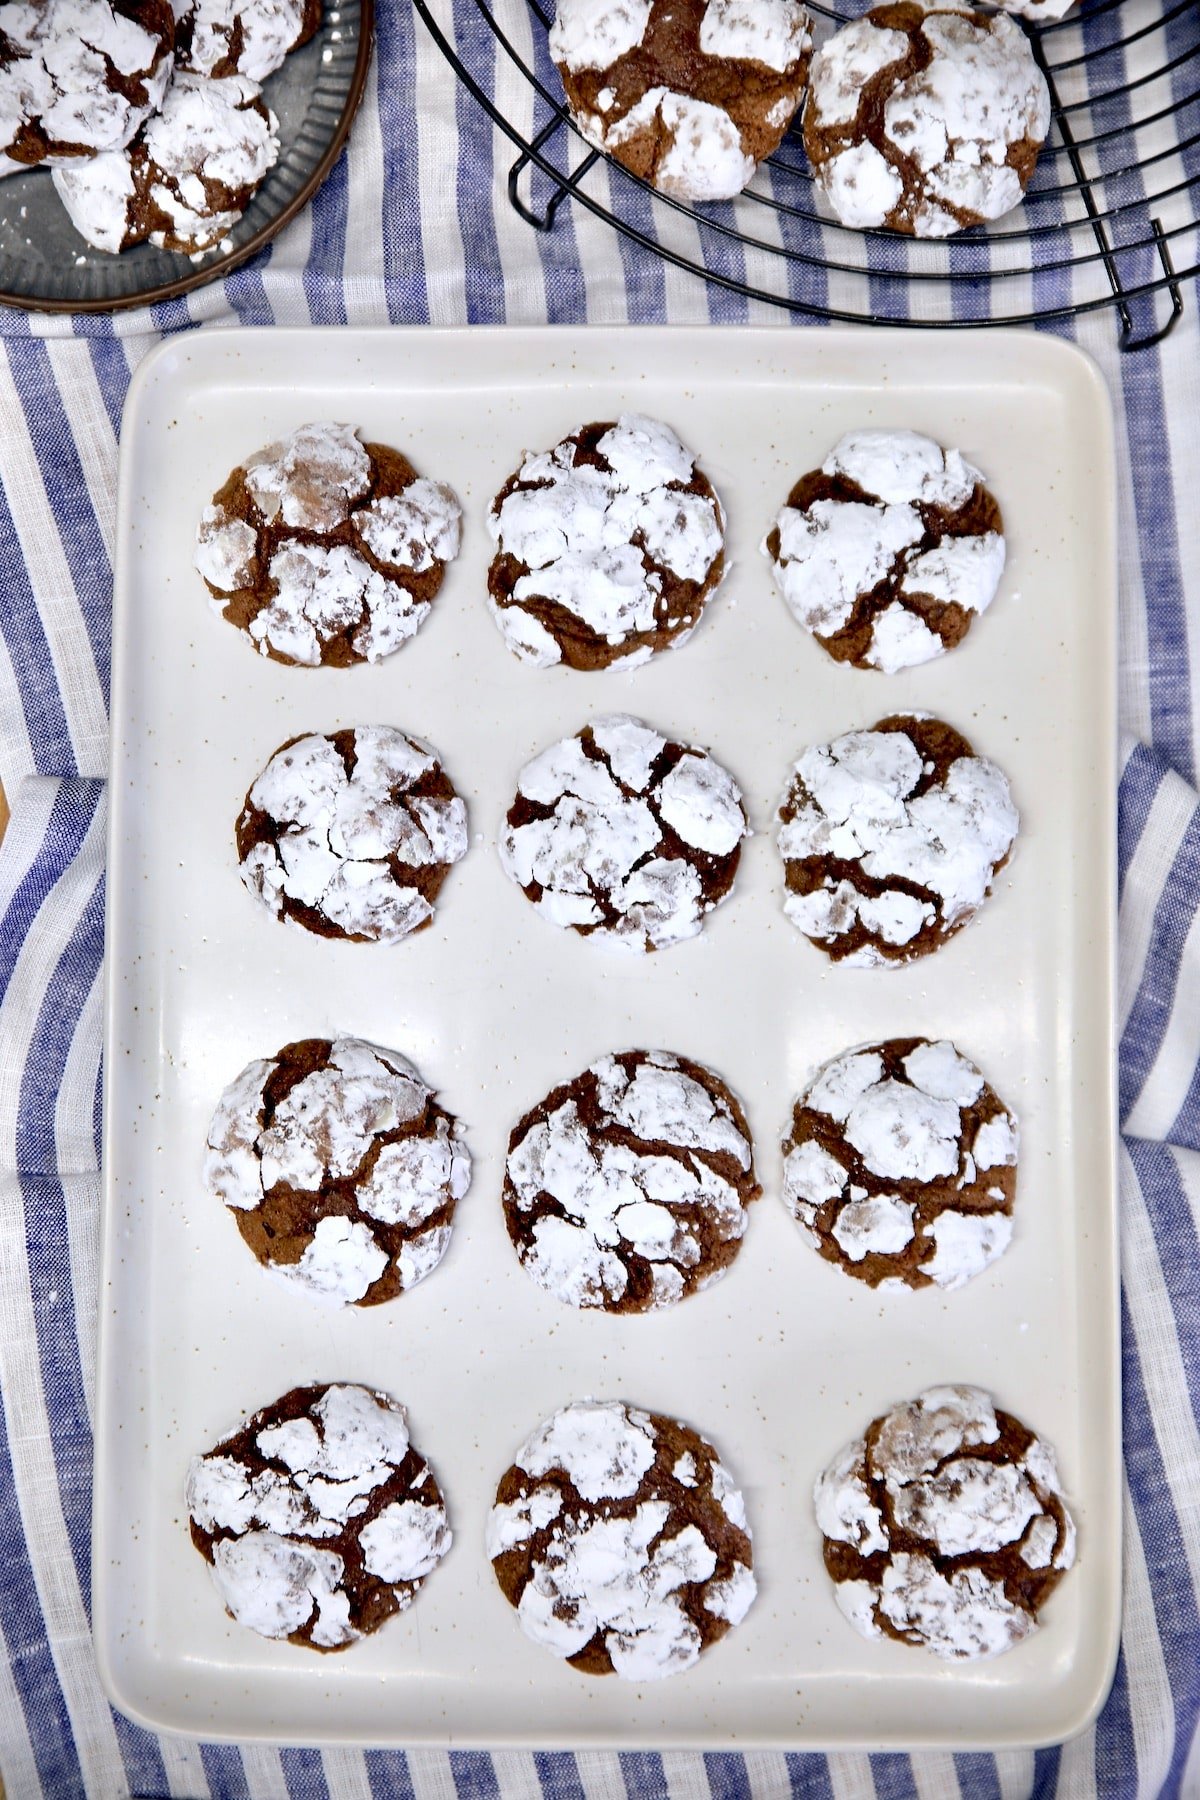 Tray of chocolate crinkle cookies.